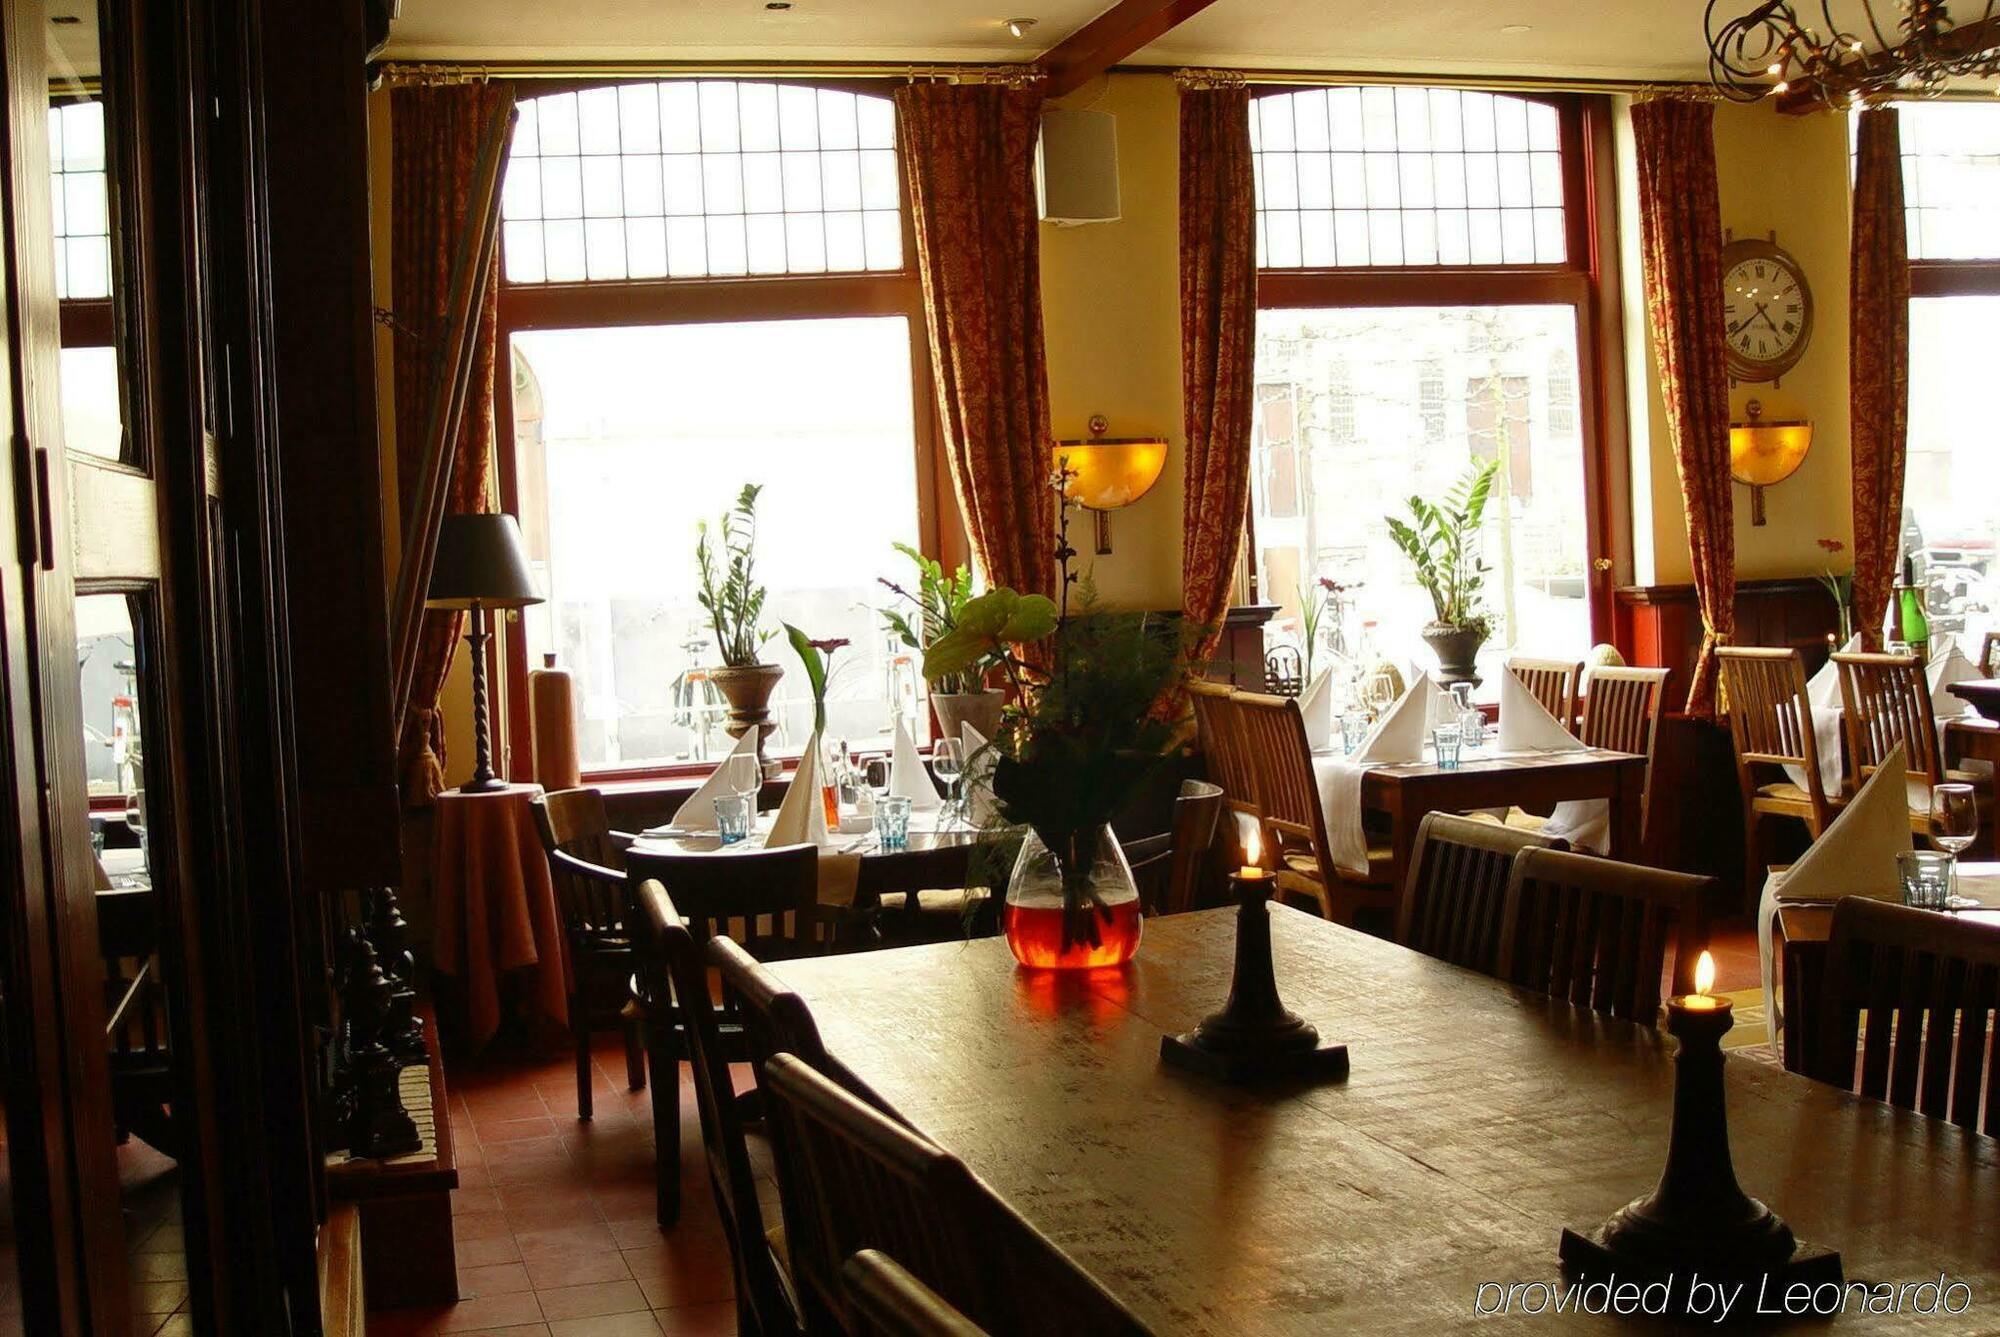 Slothotel Igesz Schagen Restaurant photo